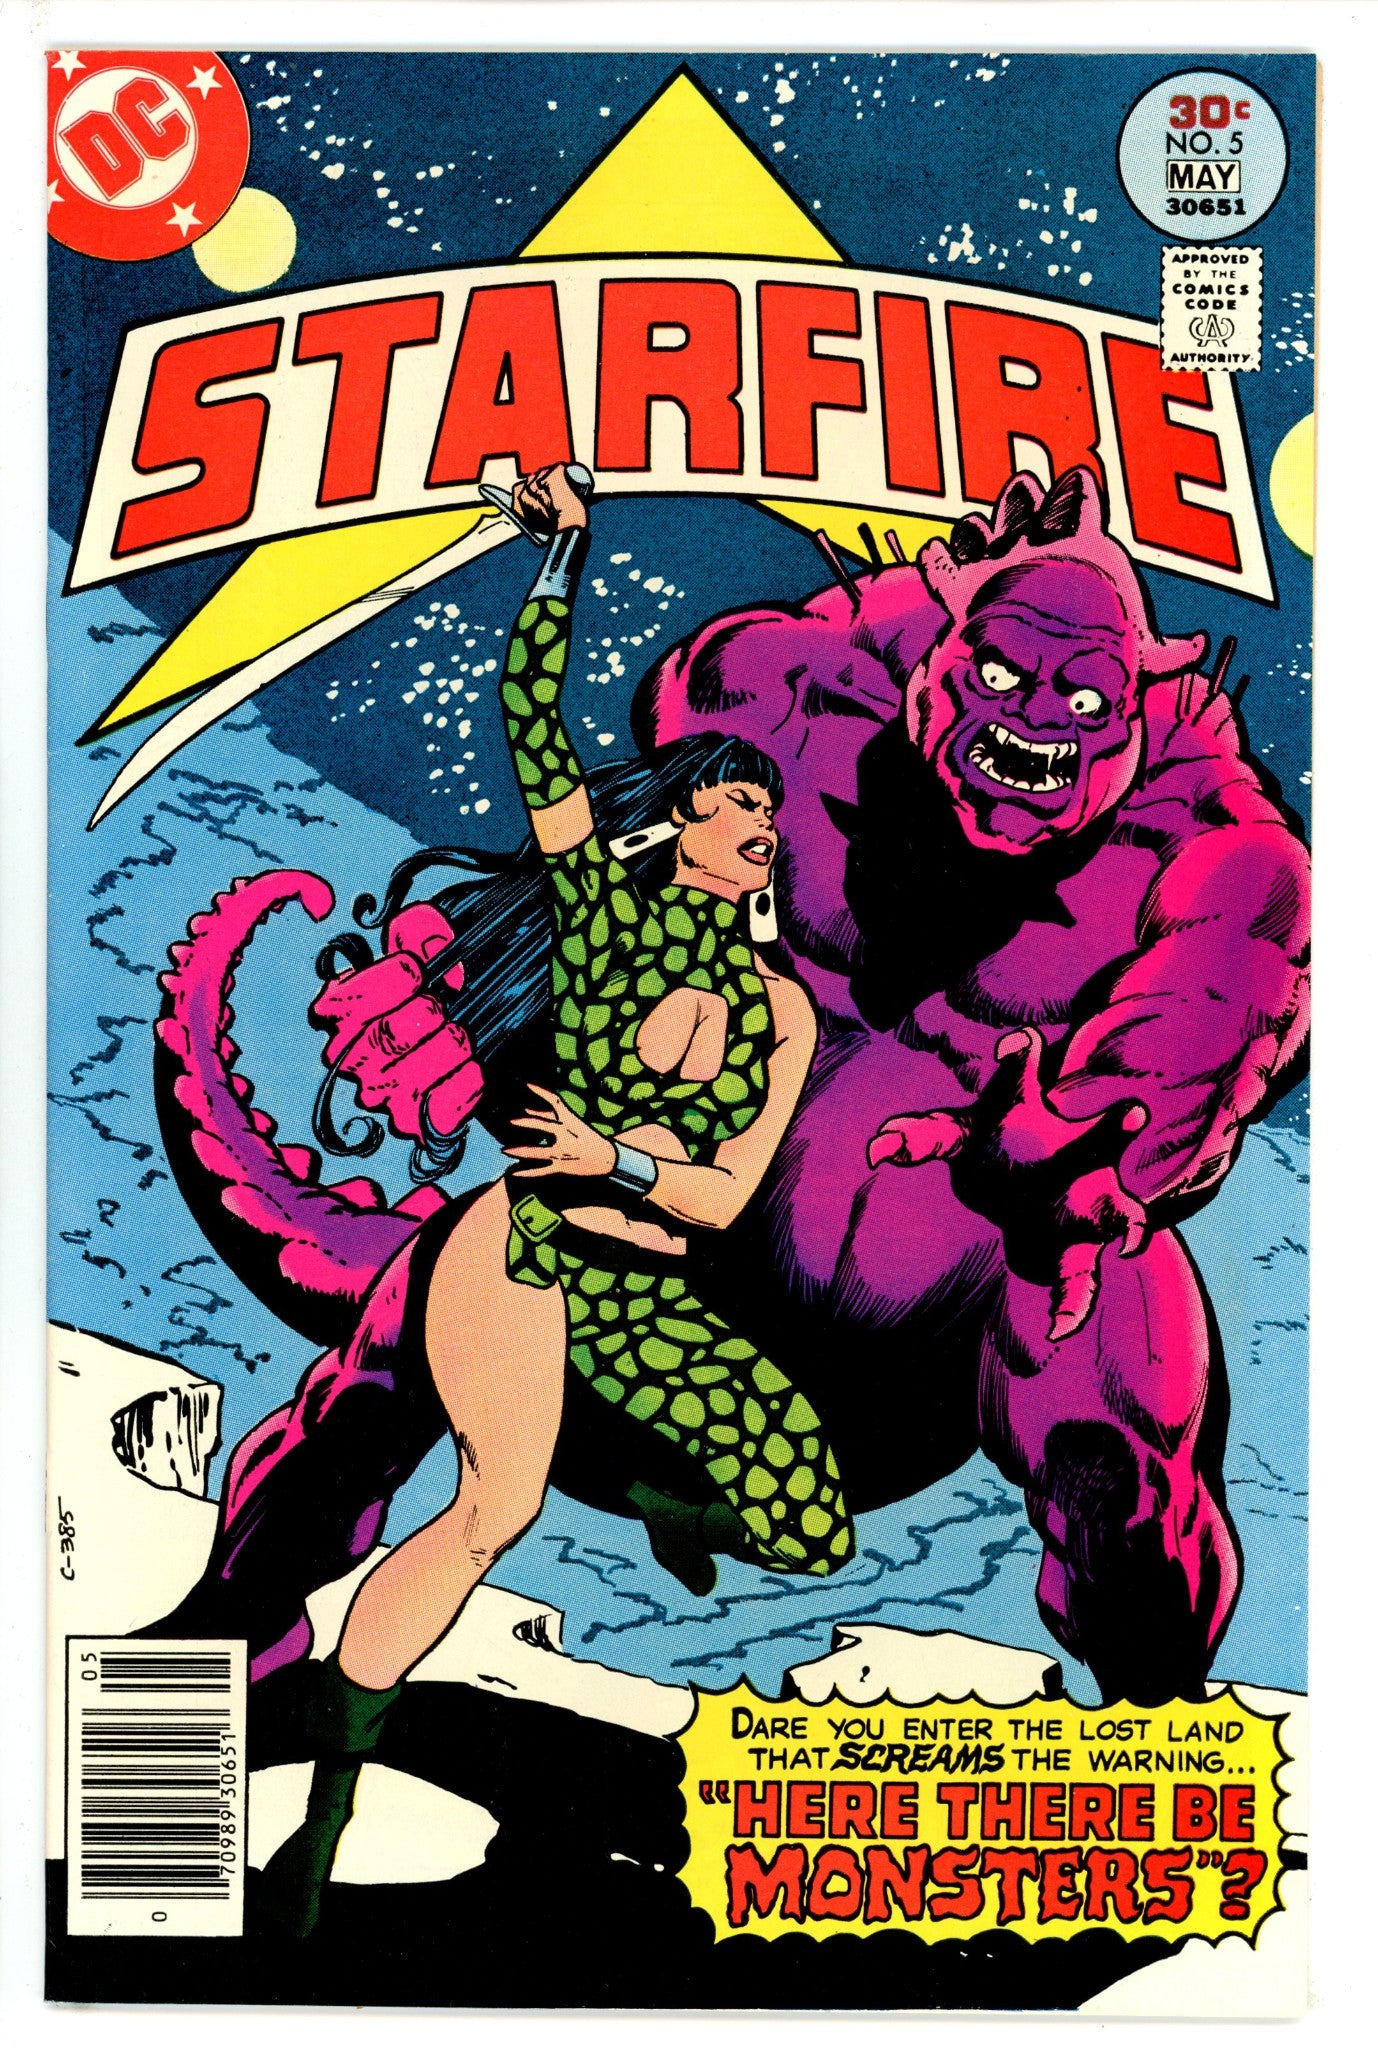 Starfire Vol 1 5 VF (1977)